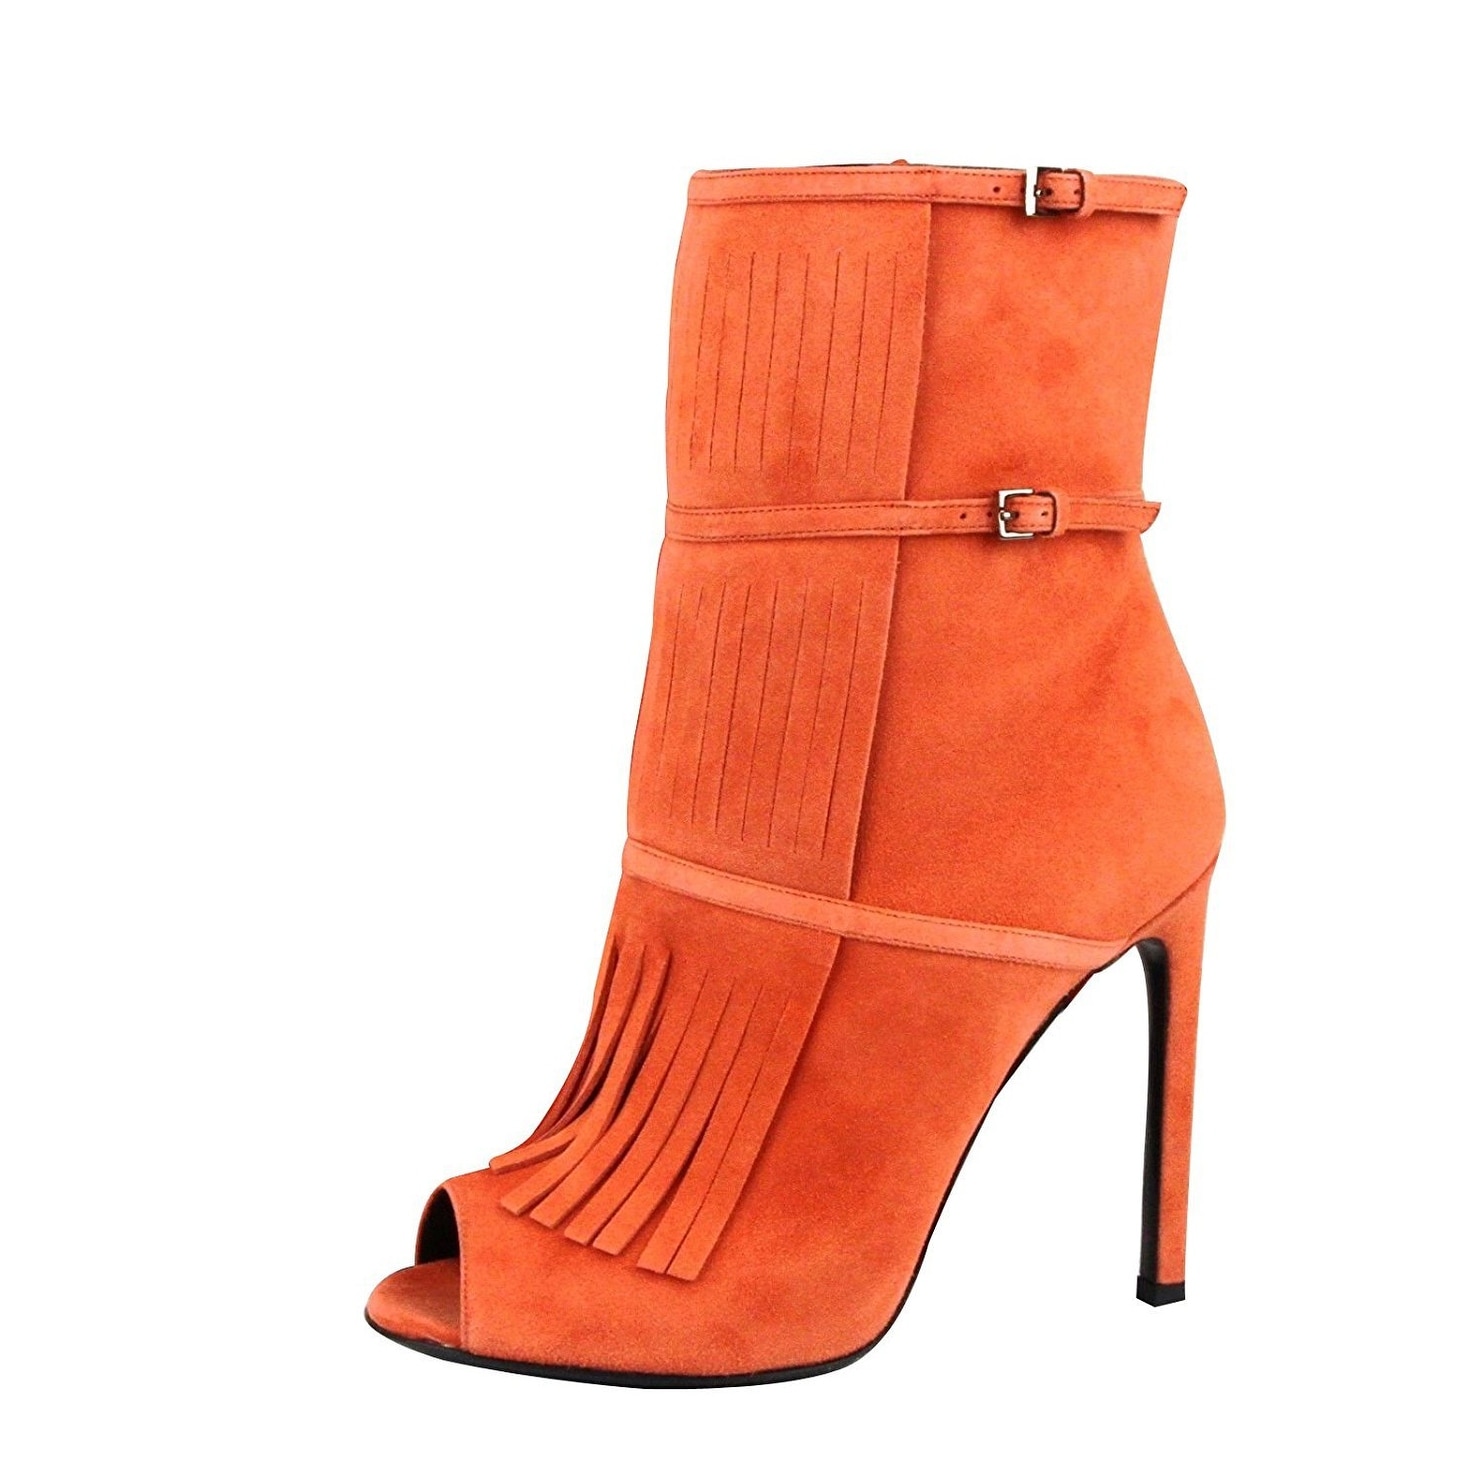 orange suede boots